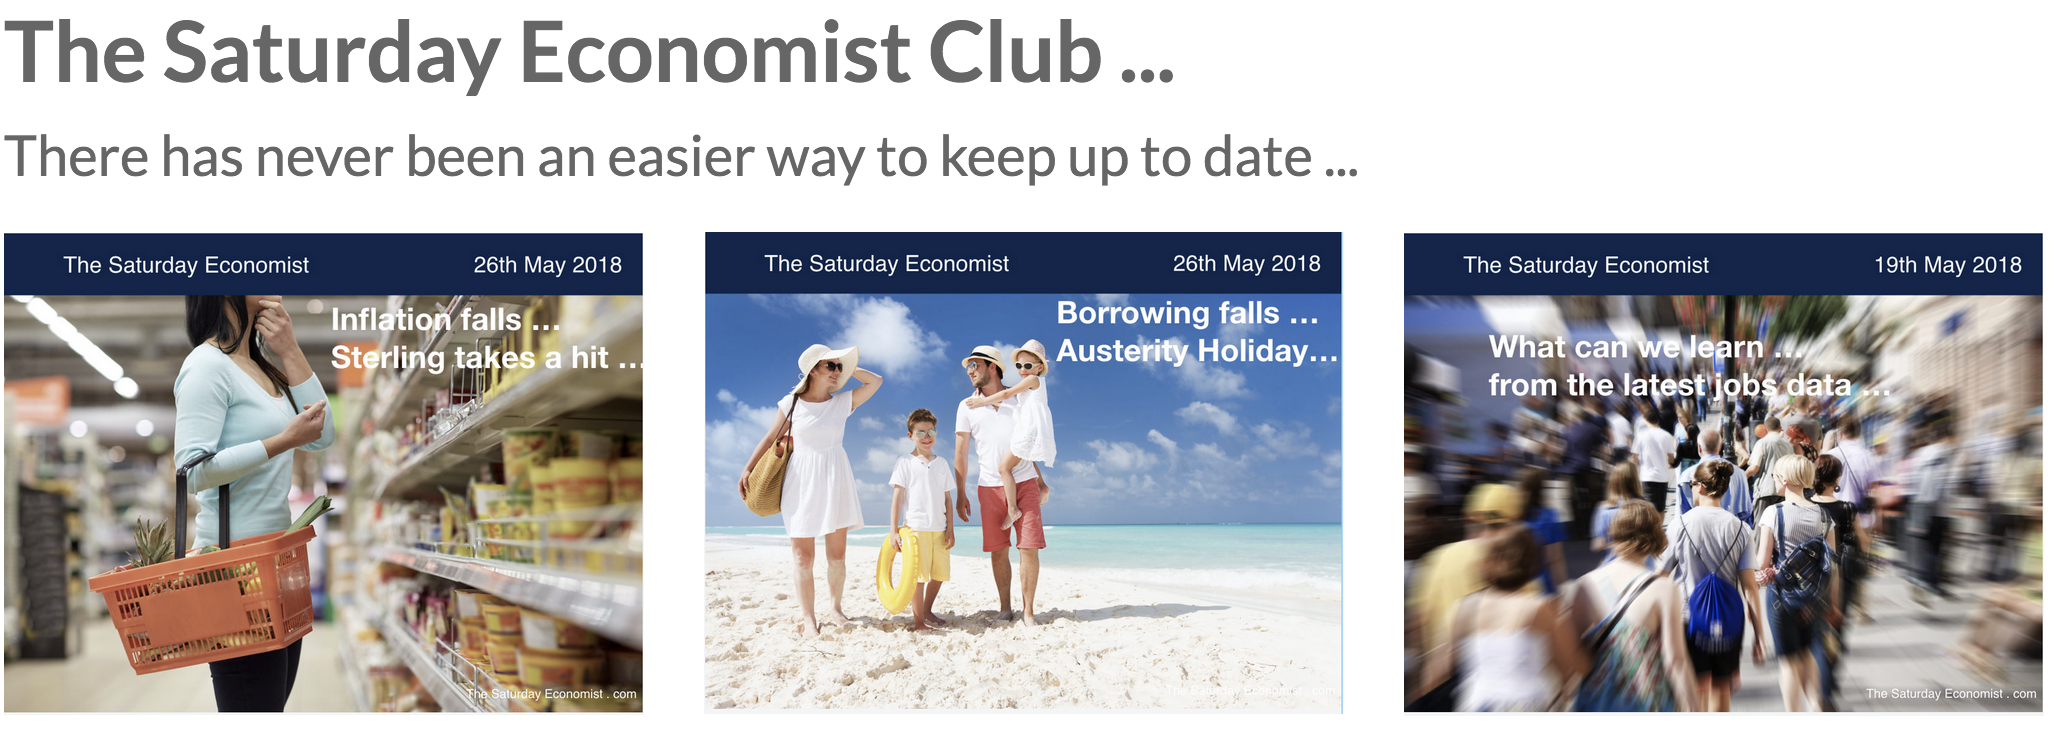 The Saturday Economist Club